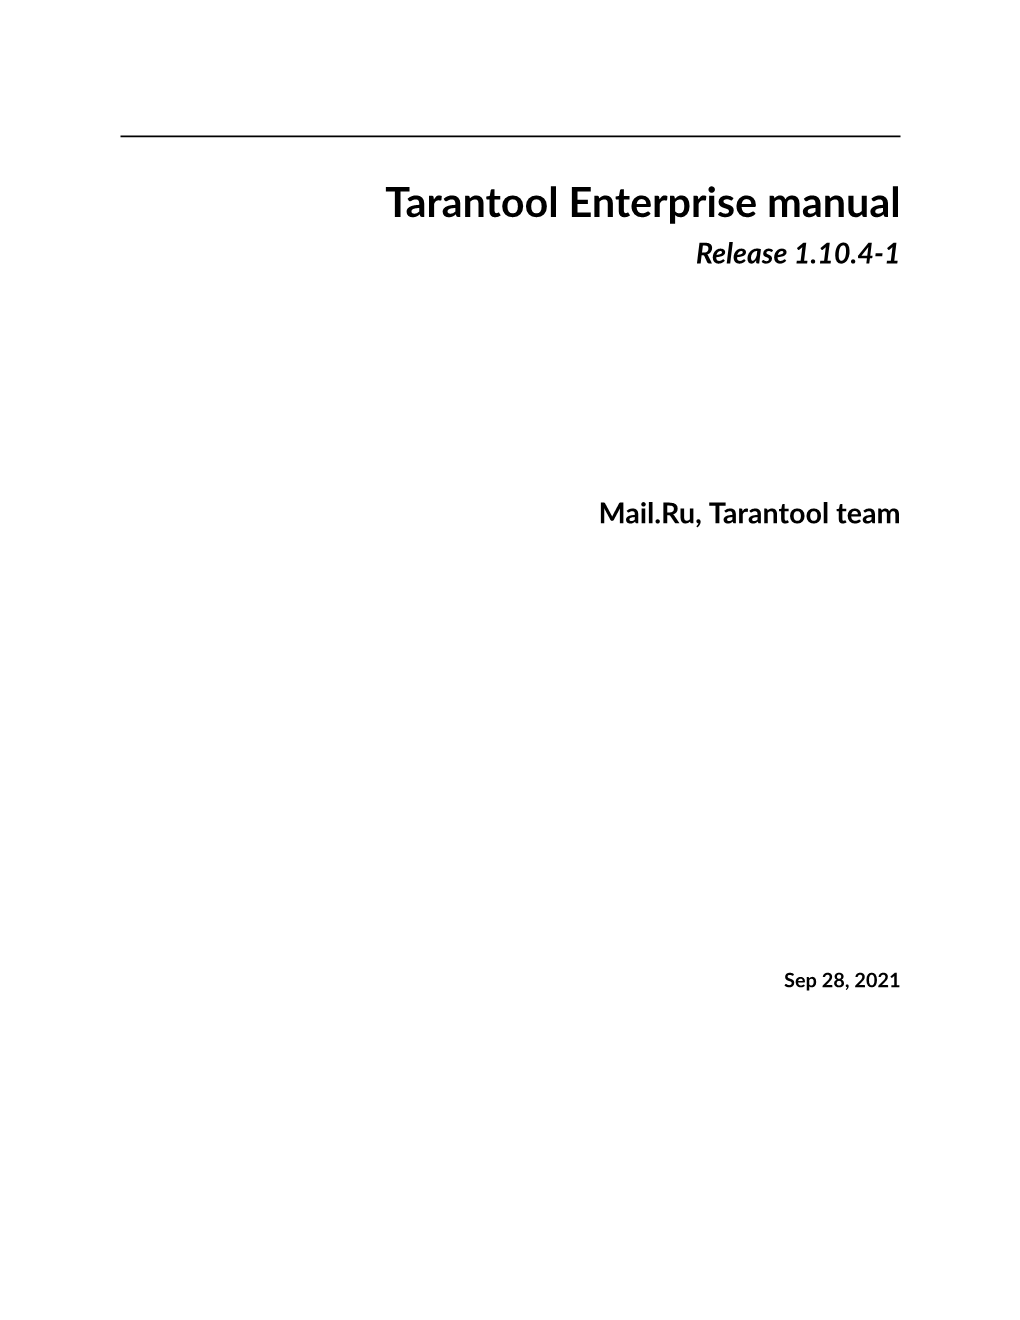 Tarantool Enterprise Manual Release 1.10.4-1